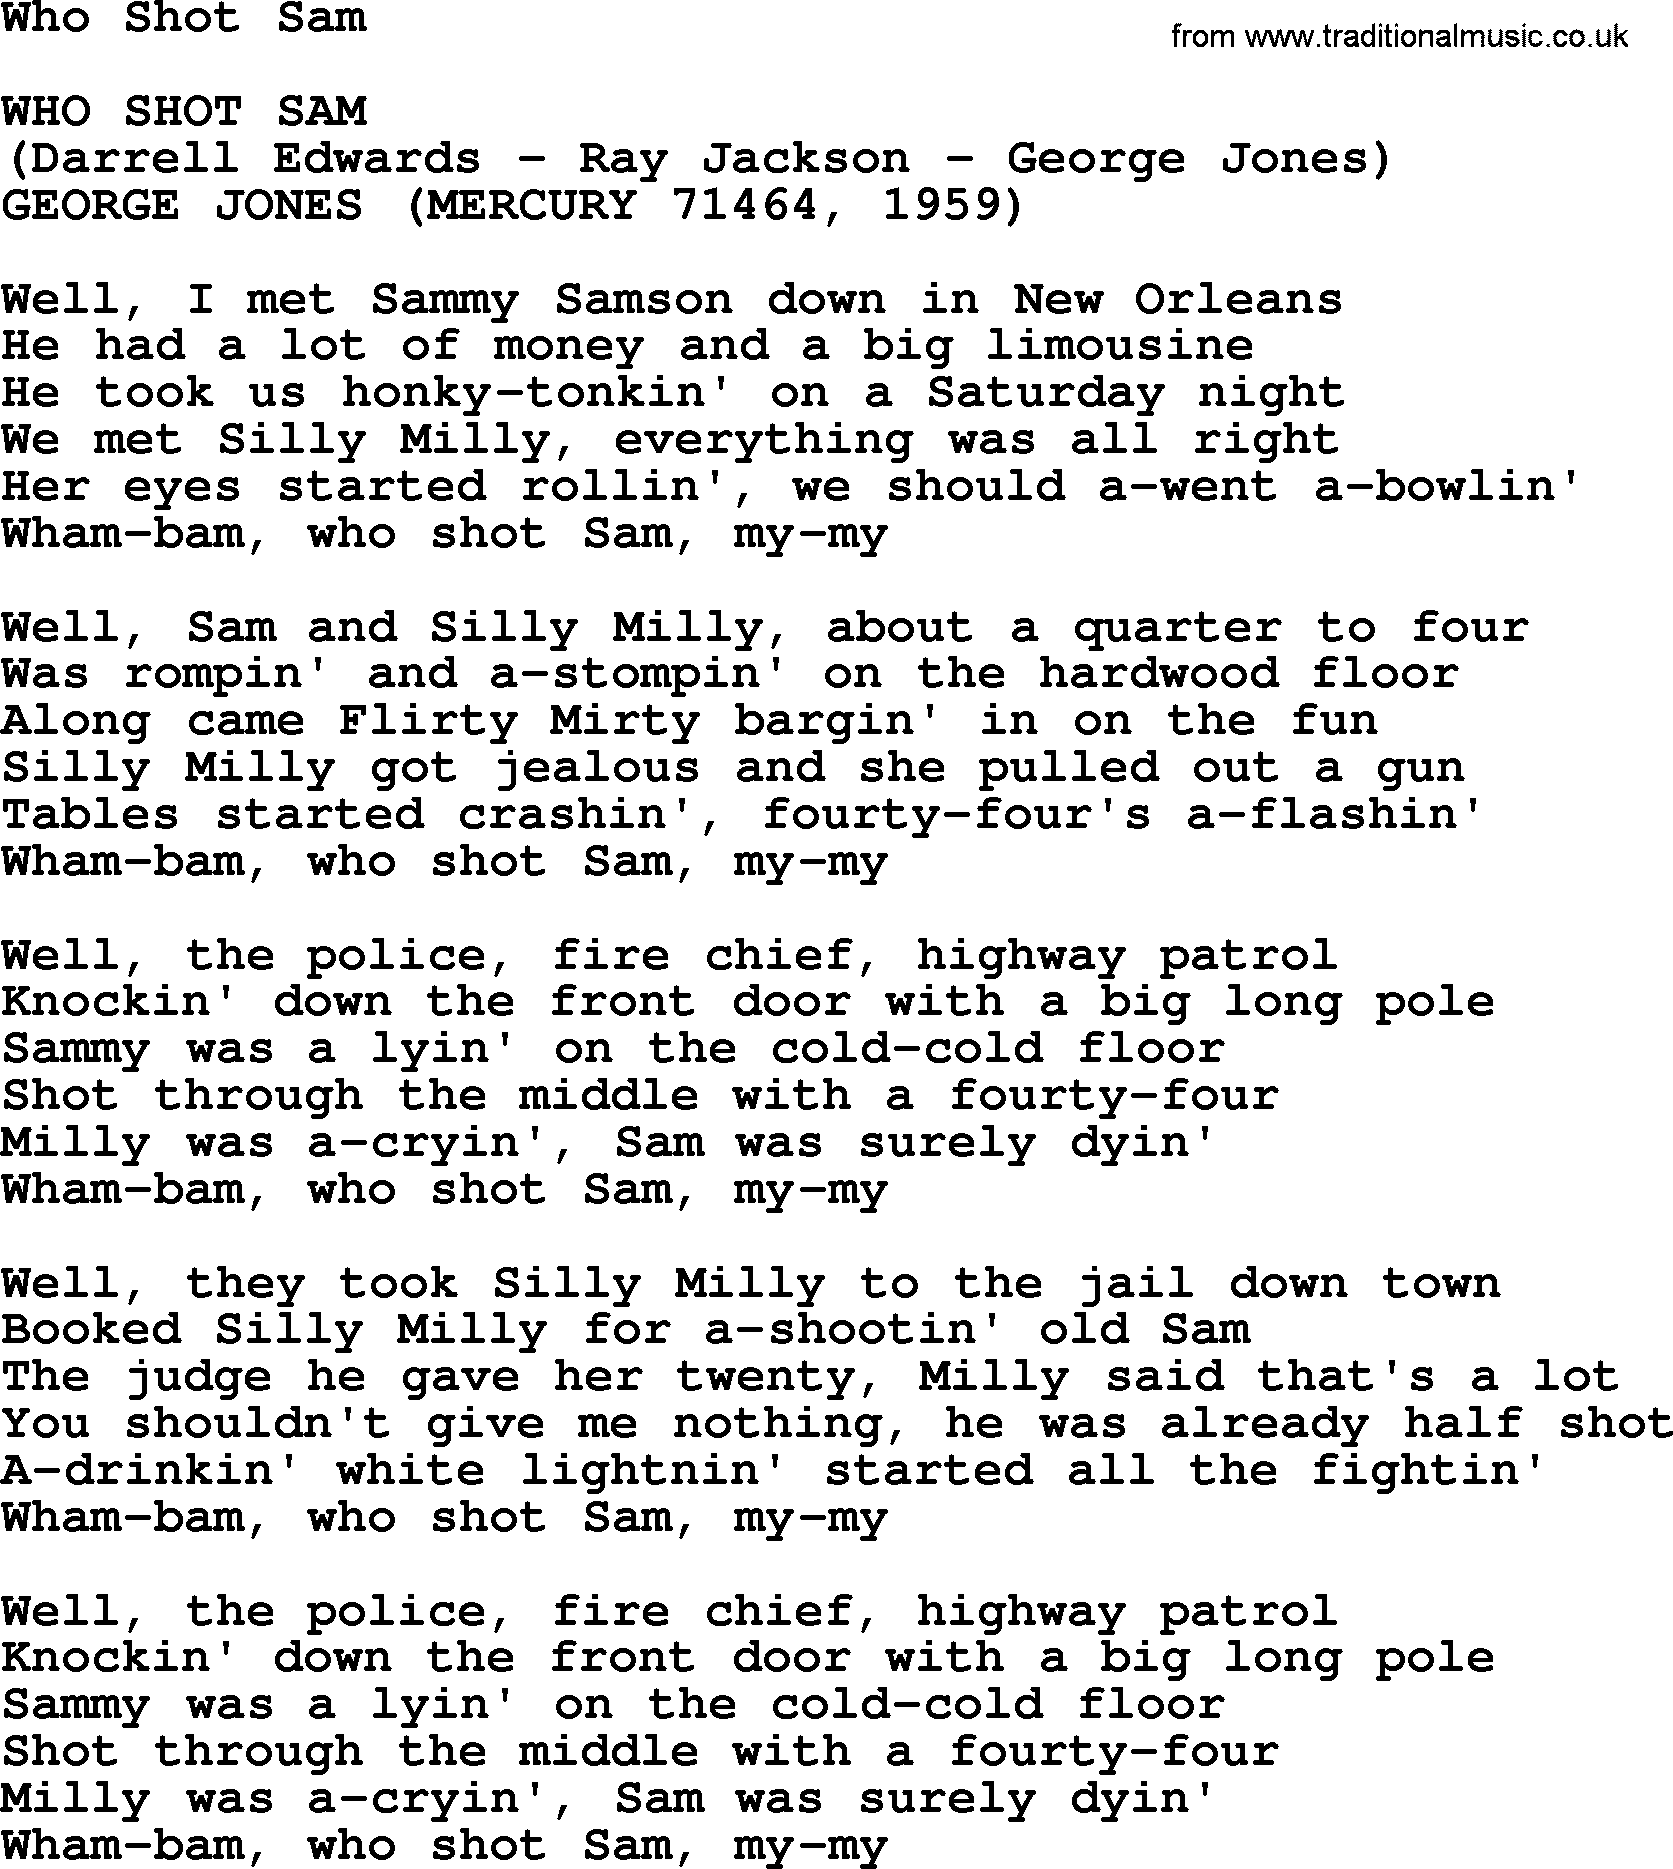 Who Shot Sam by George Jones - Counrty song lyrics